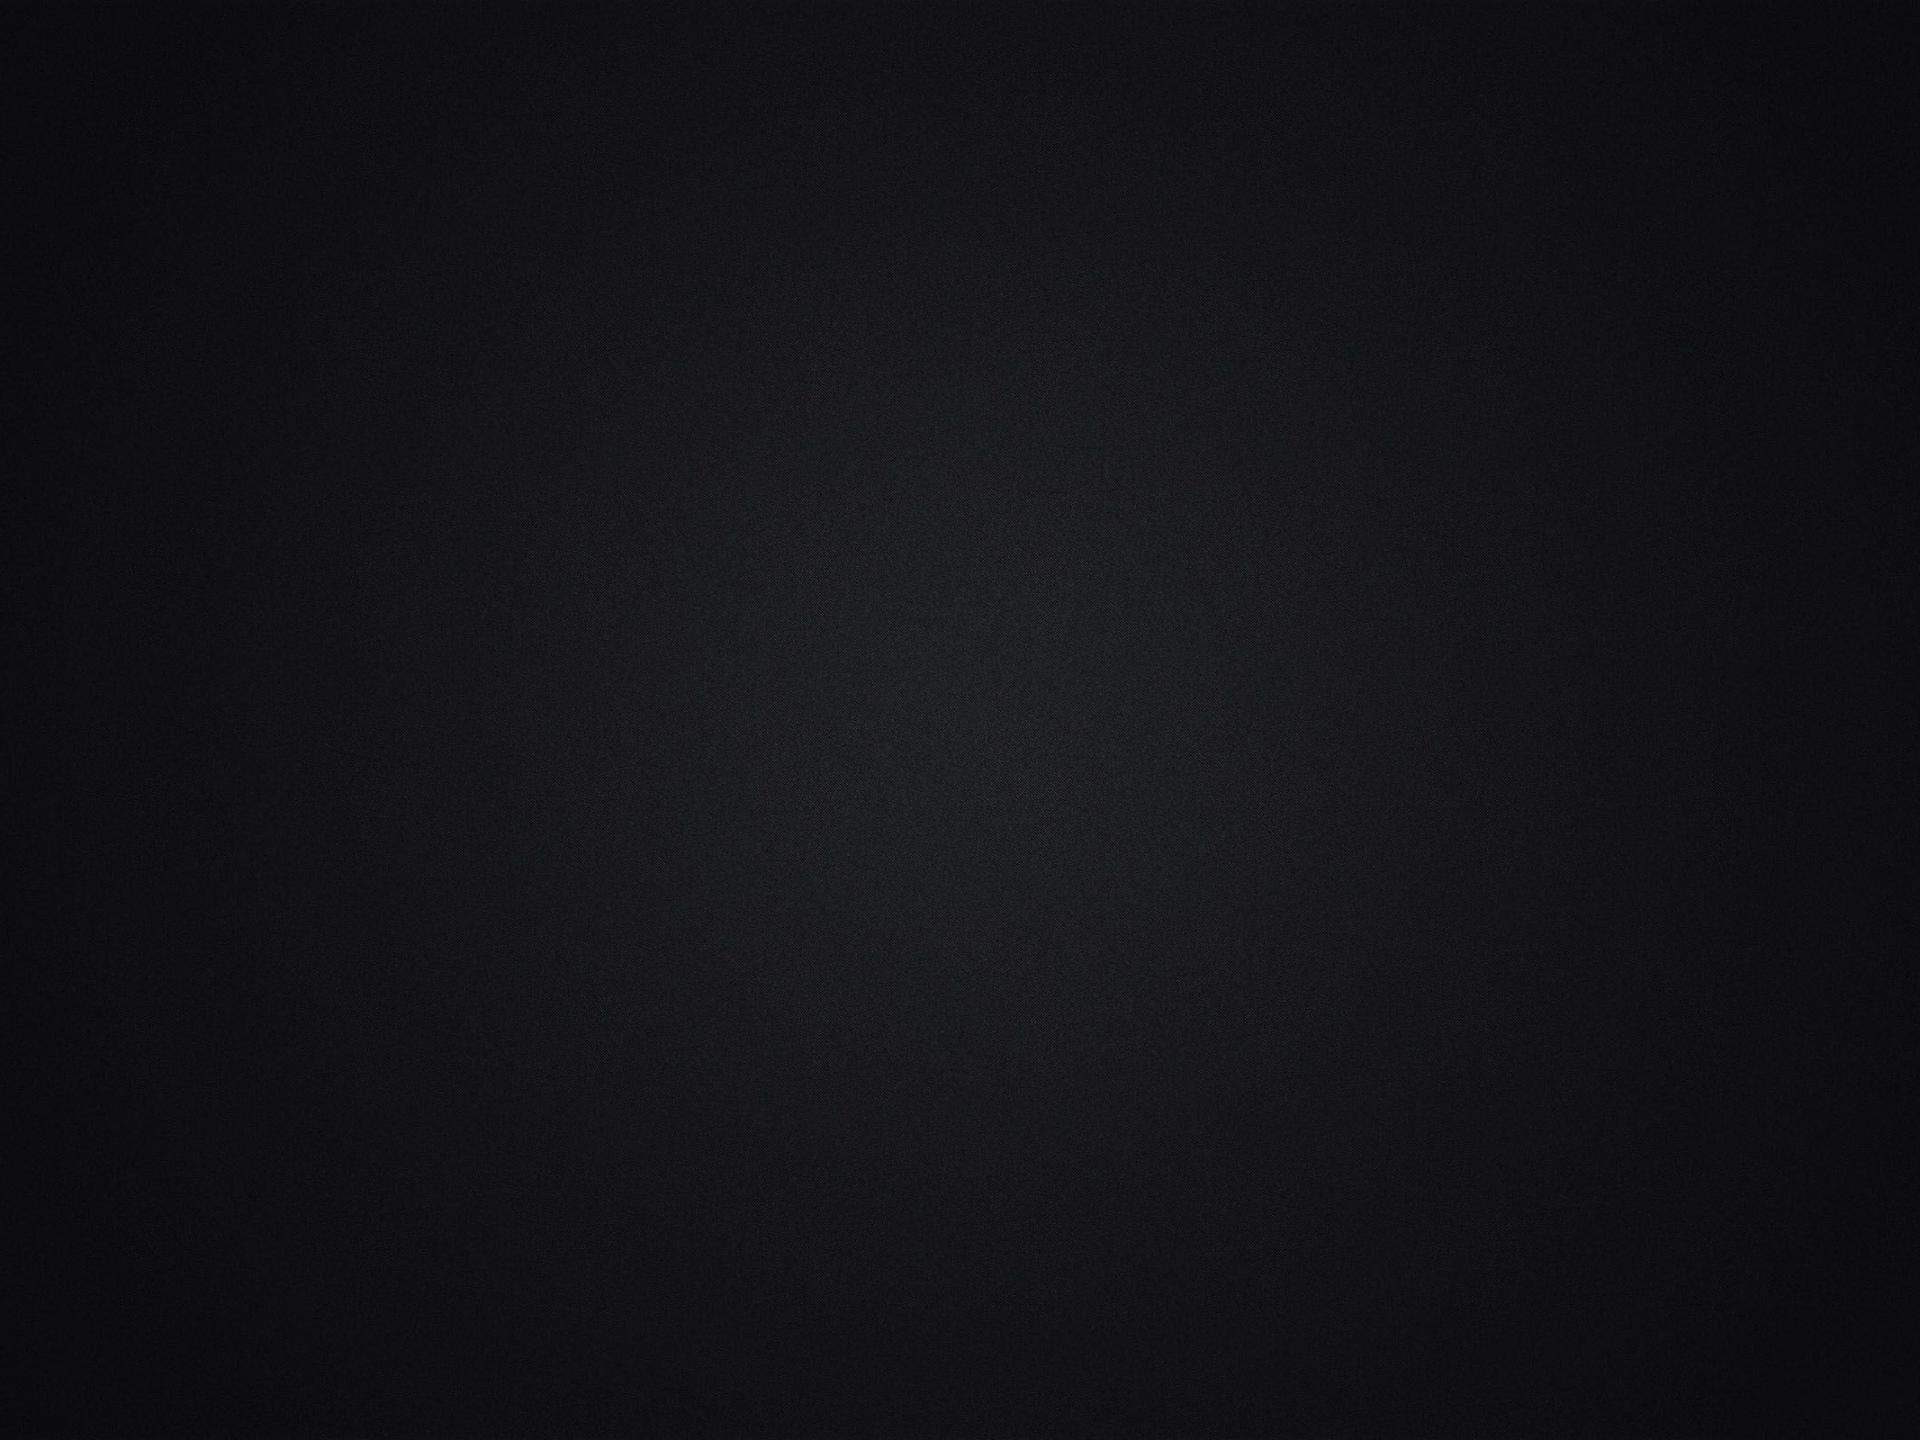 Black Background Fabric Abstract Desktop Wallpaper